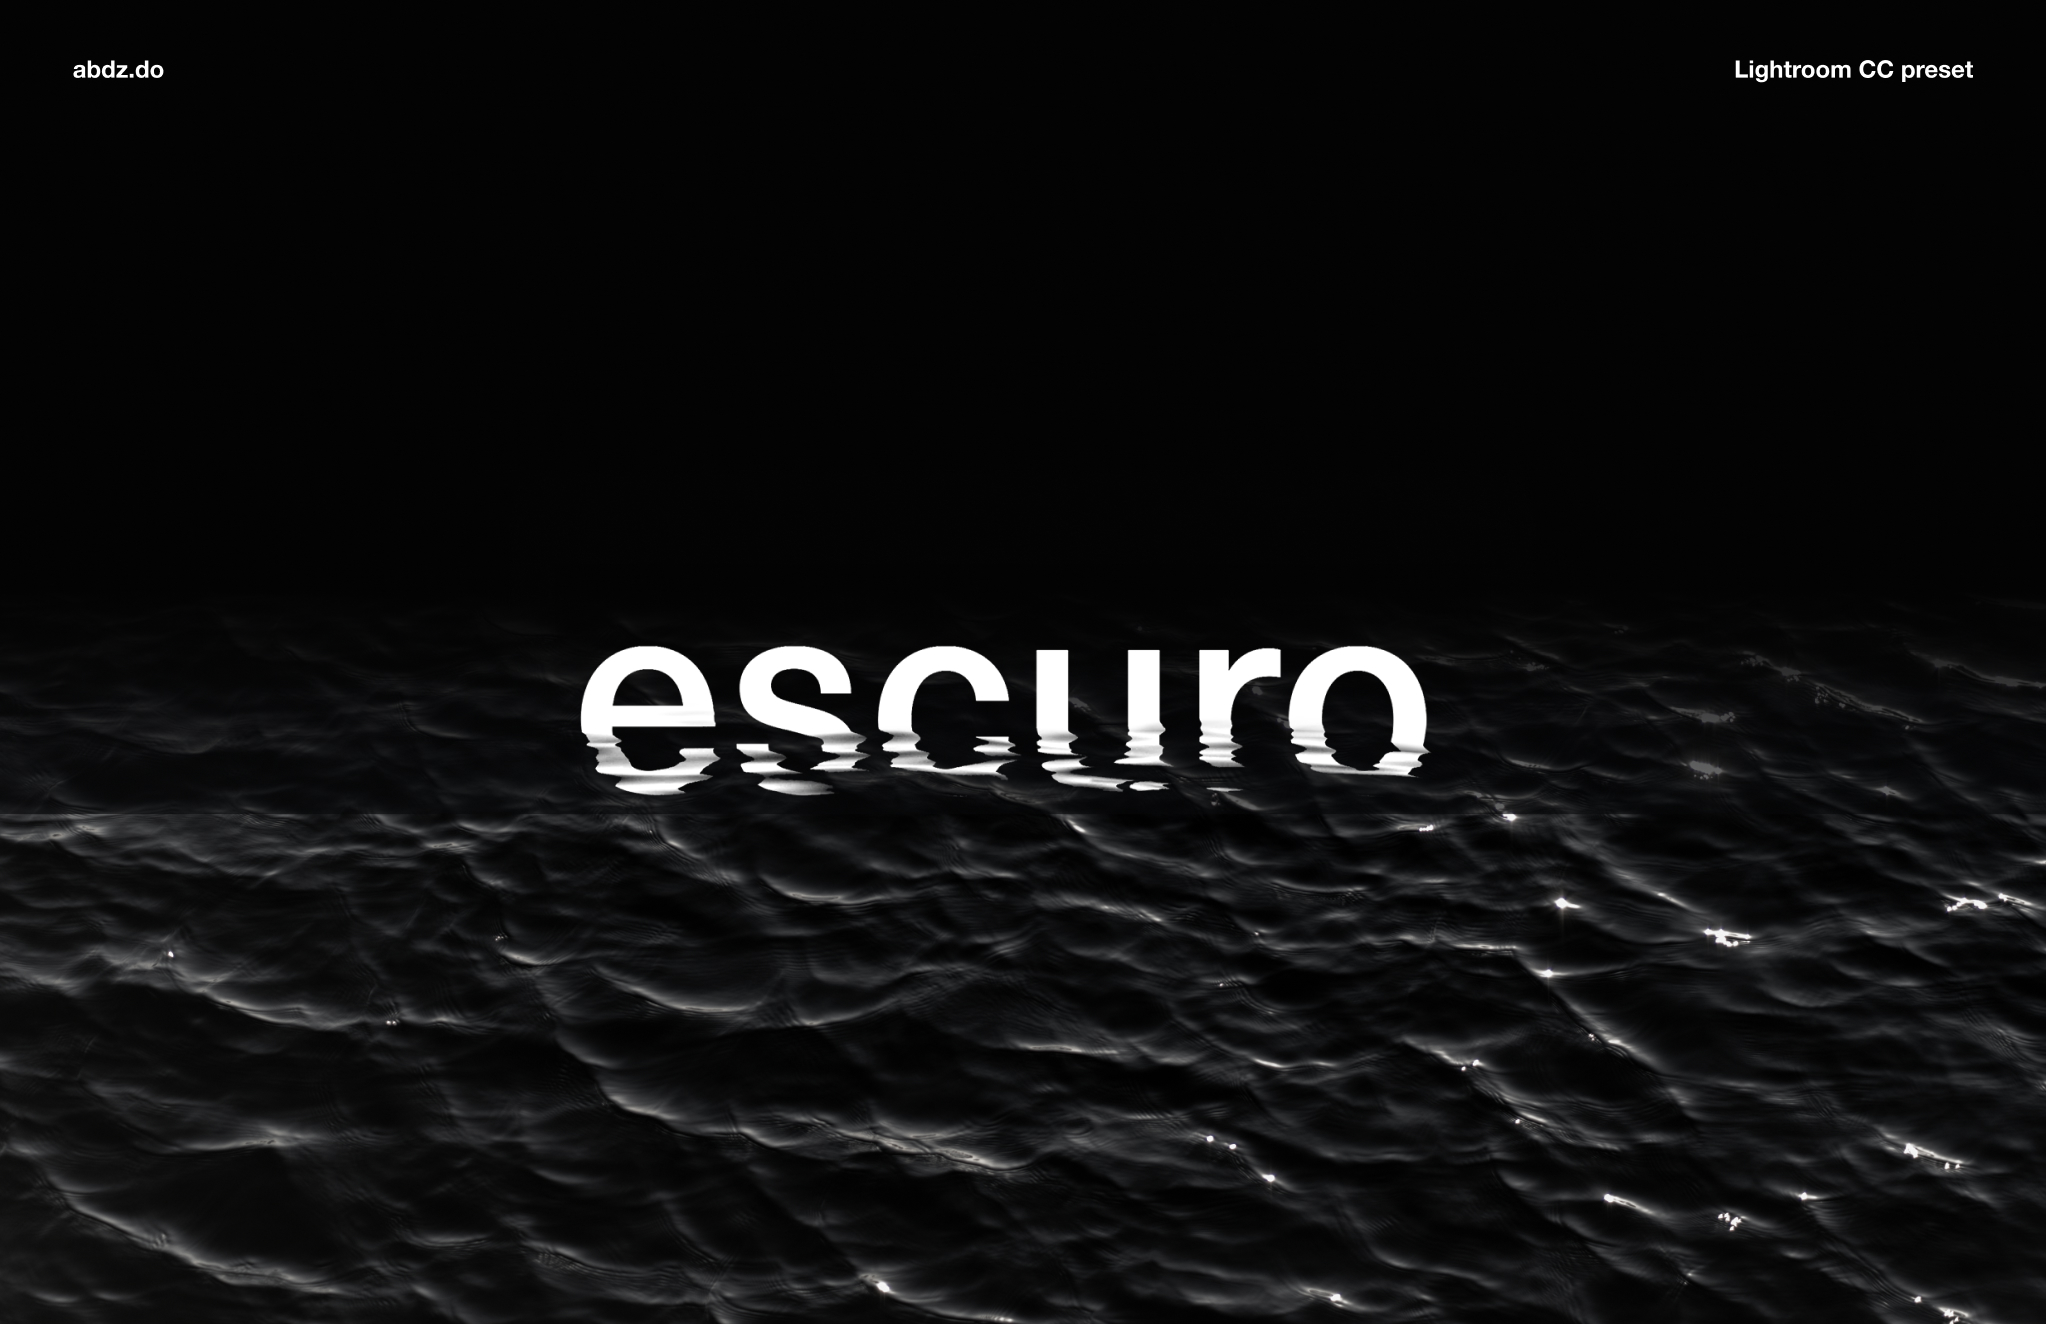 Profile Page screen design idea #143: Introducing Escuro Lightroom CC Preset